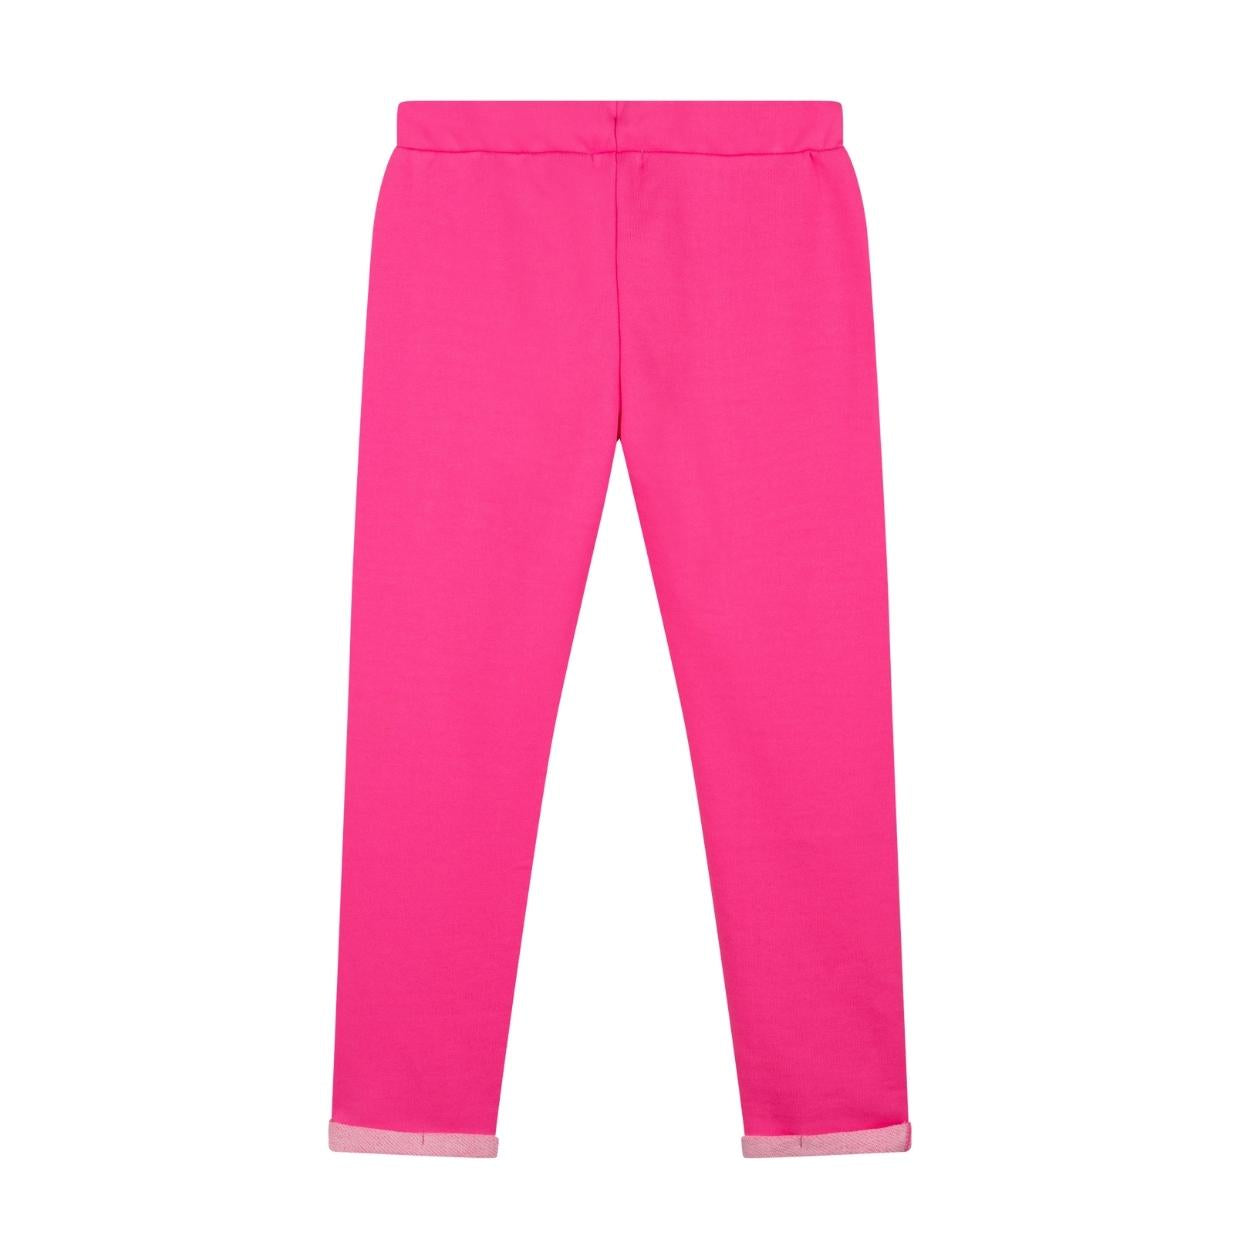 Billieblush Pink Sequins Jogging Bottom